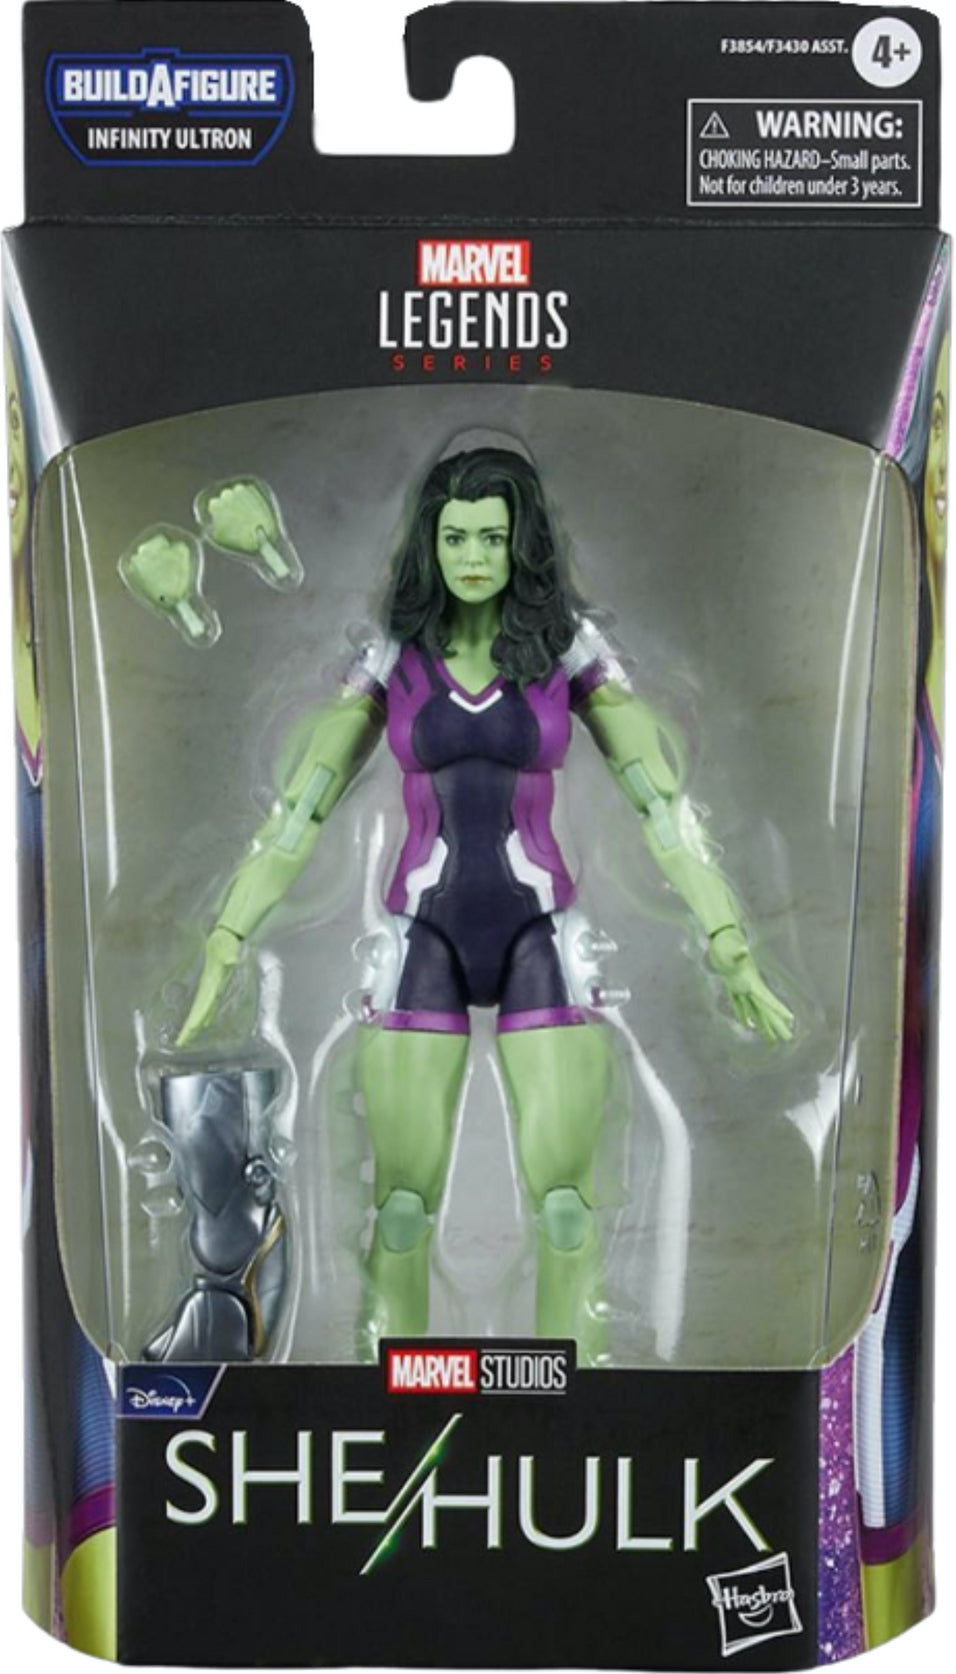 Marvel Legends - She-Hulk (She-Hulk) - [Infinity Ultron]